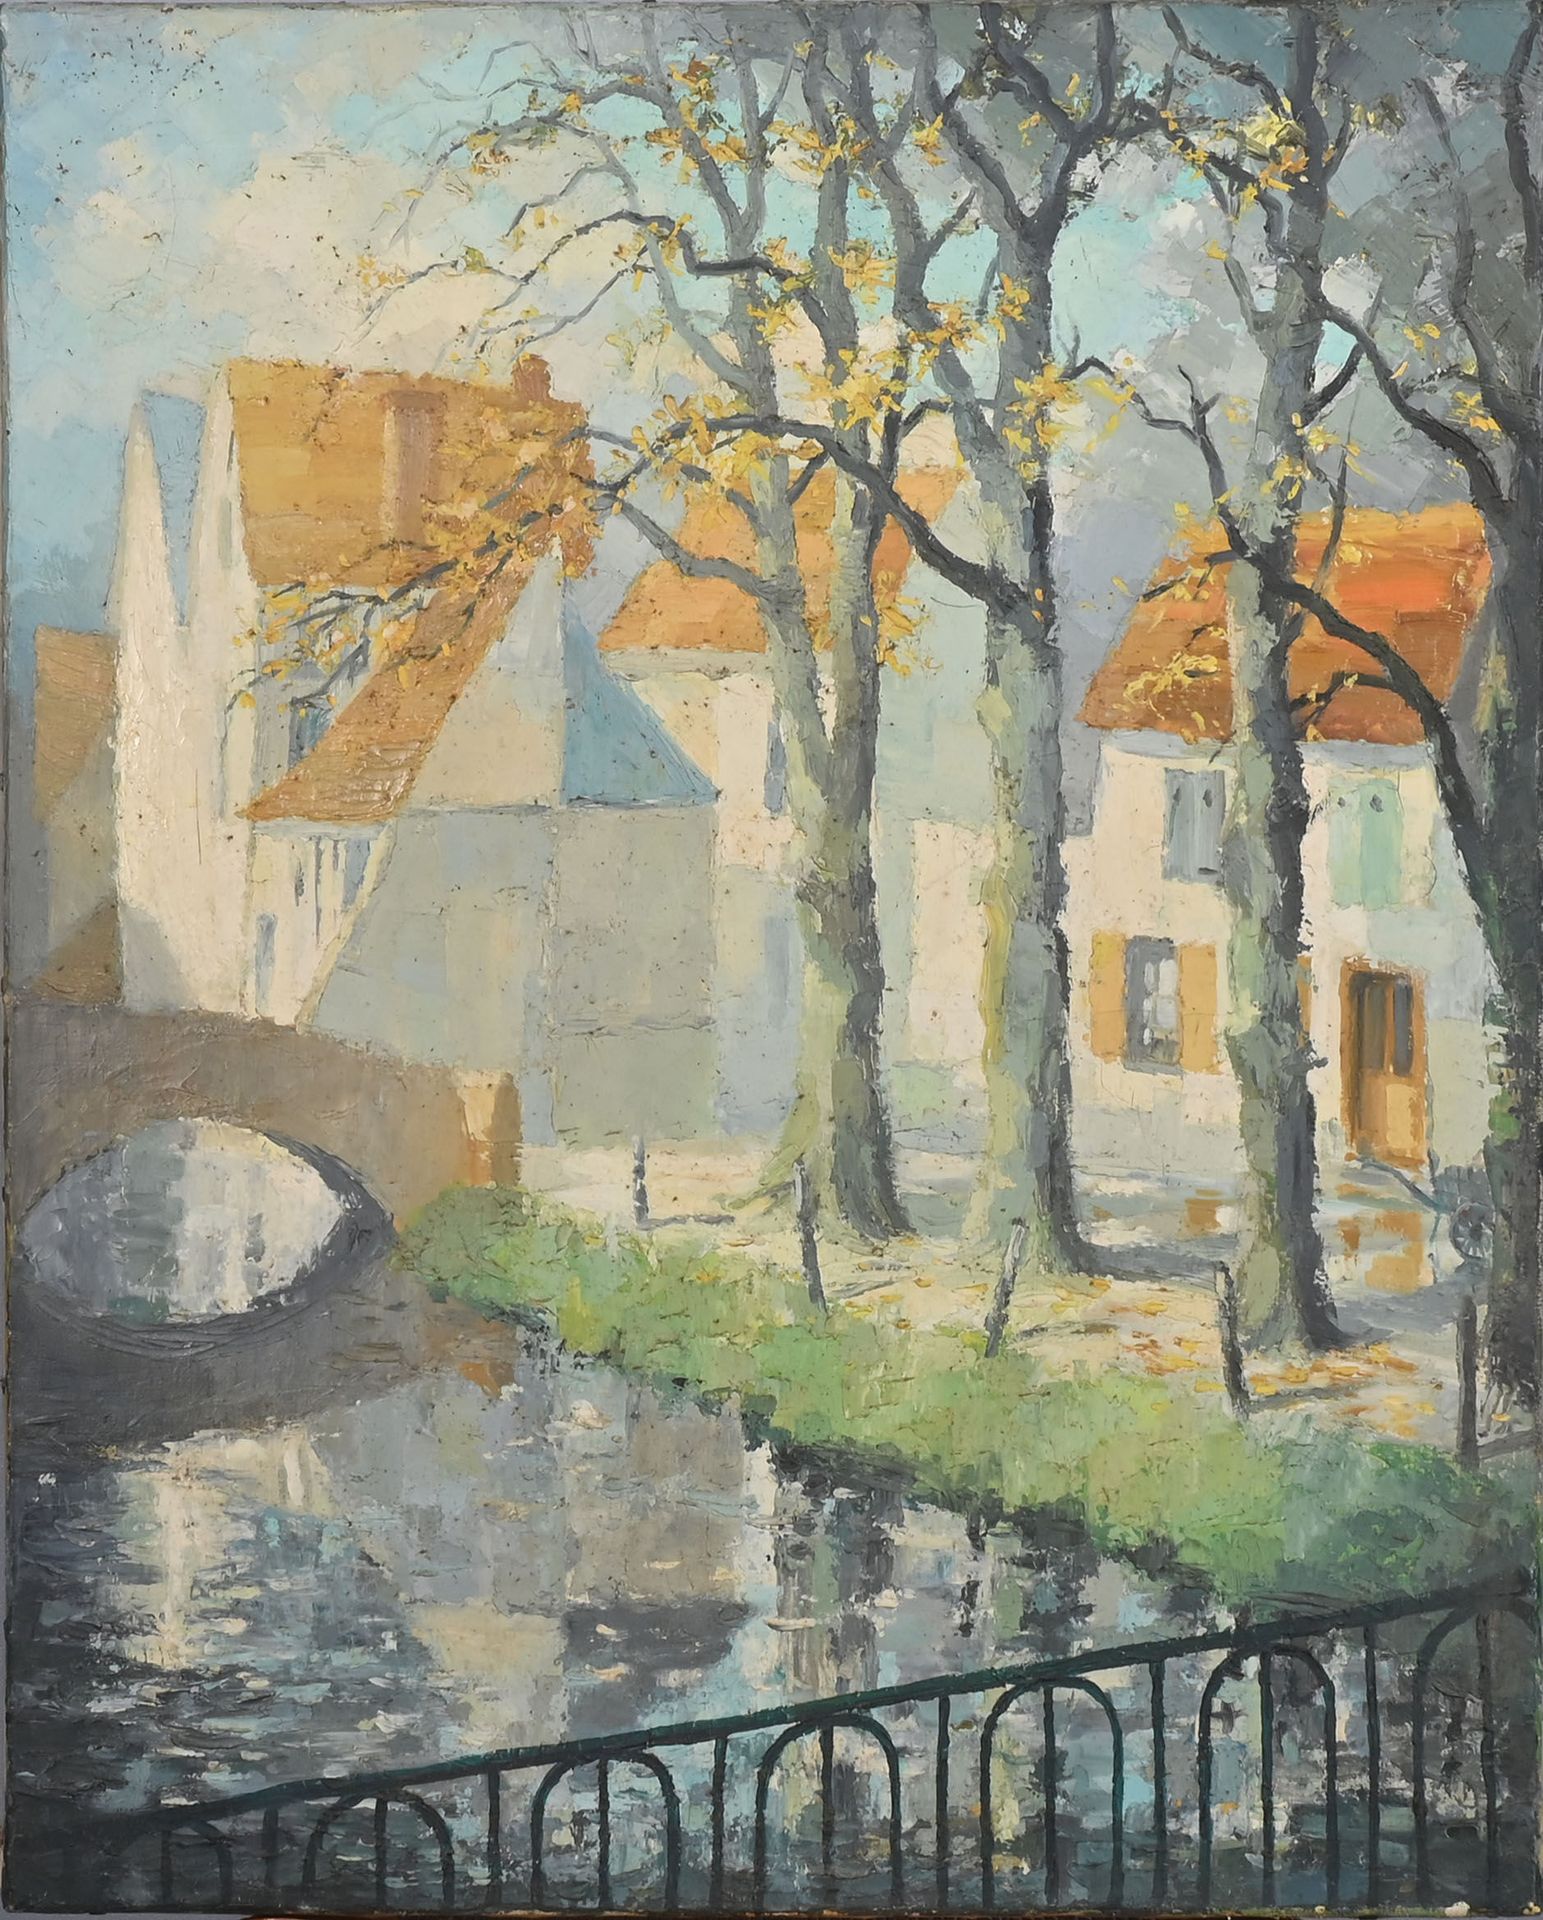 Null 热拉尔-弗莱迪内(Gérard FRETIGNE) (1928-2005)
下城景观
布面油画
61 x 50 cm.